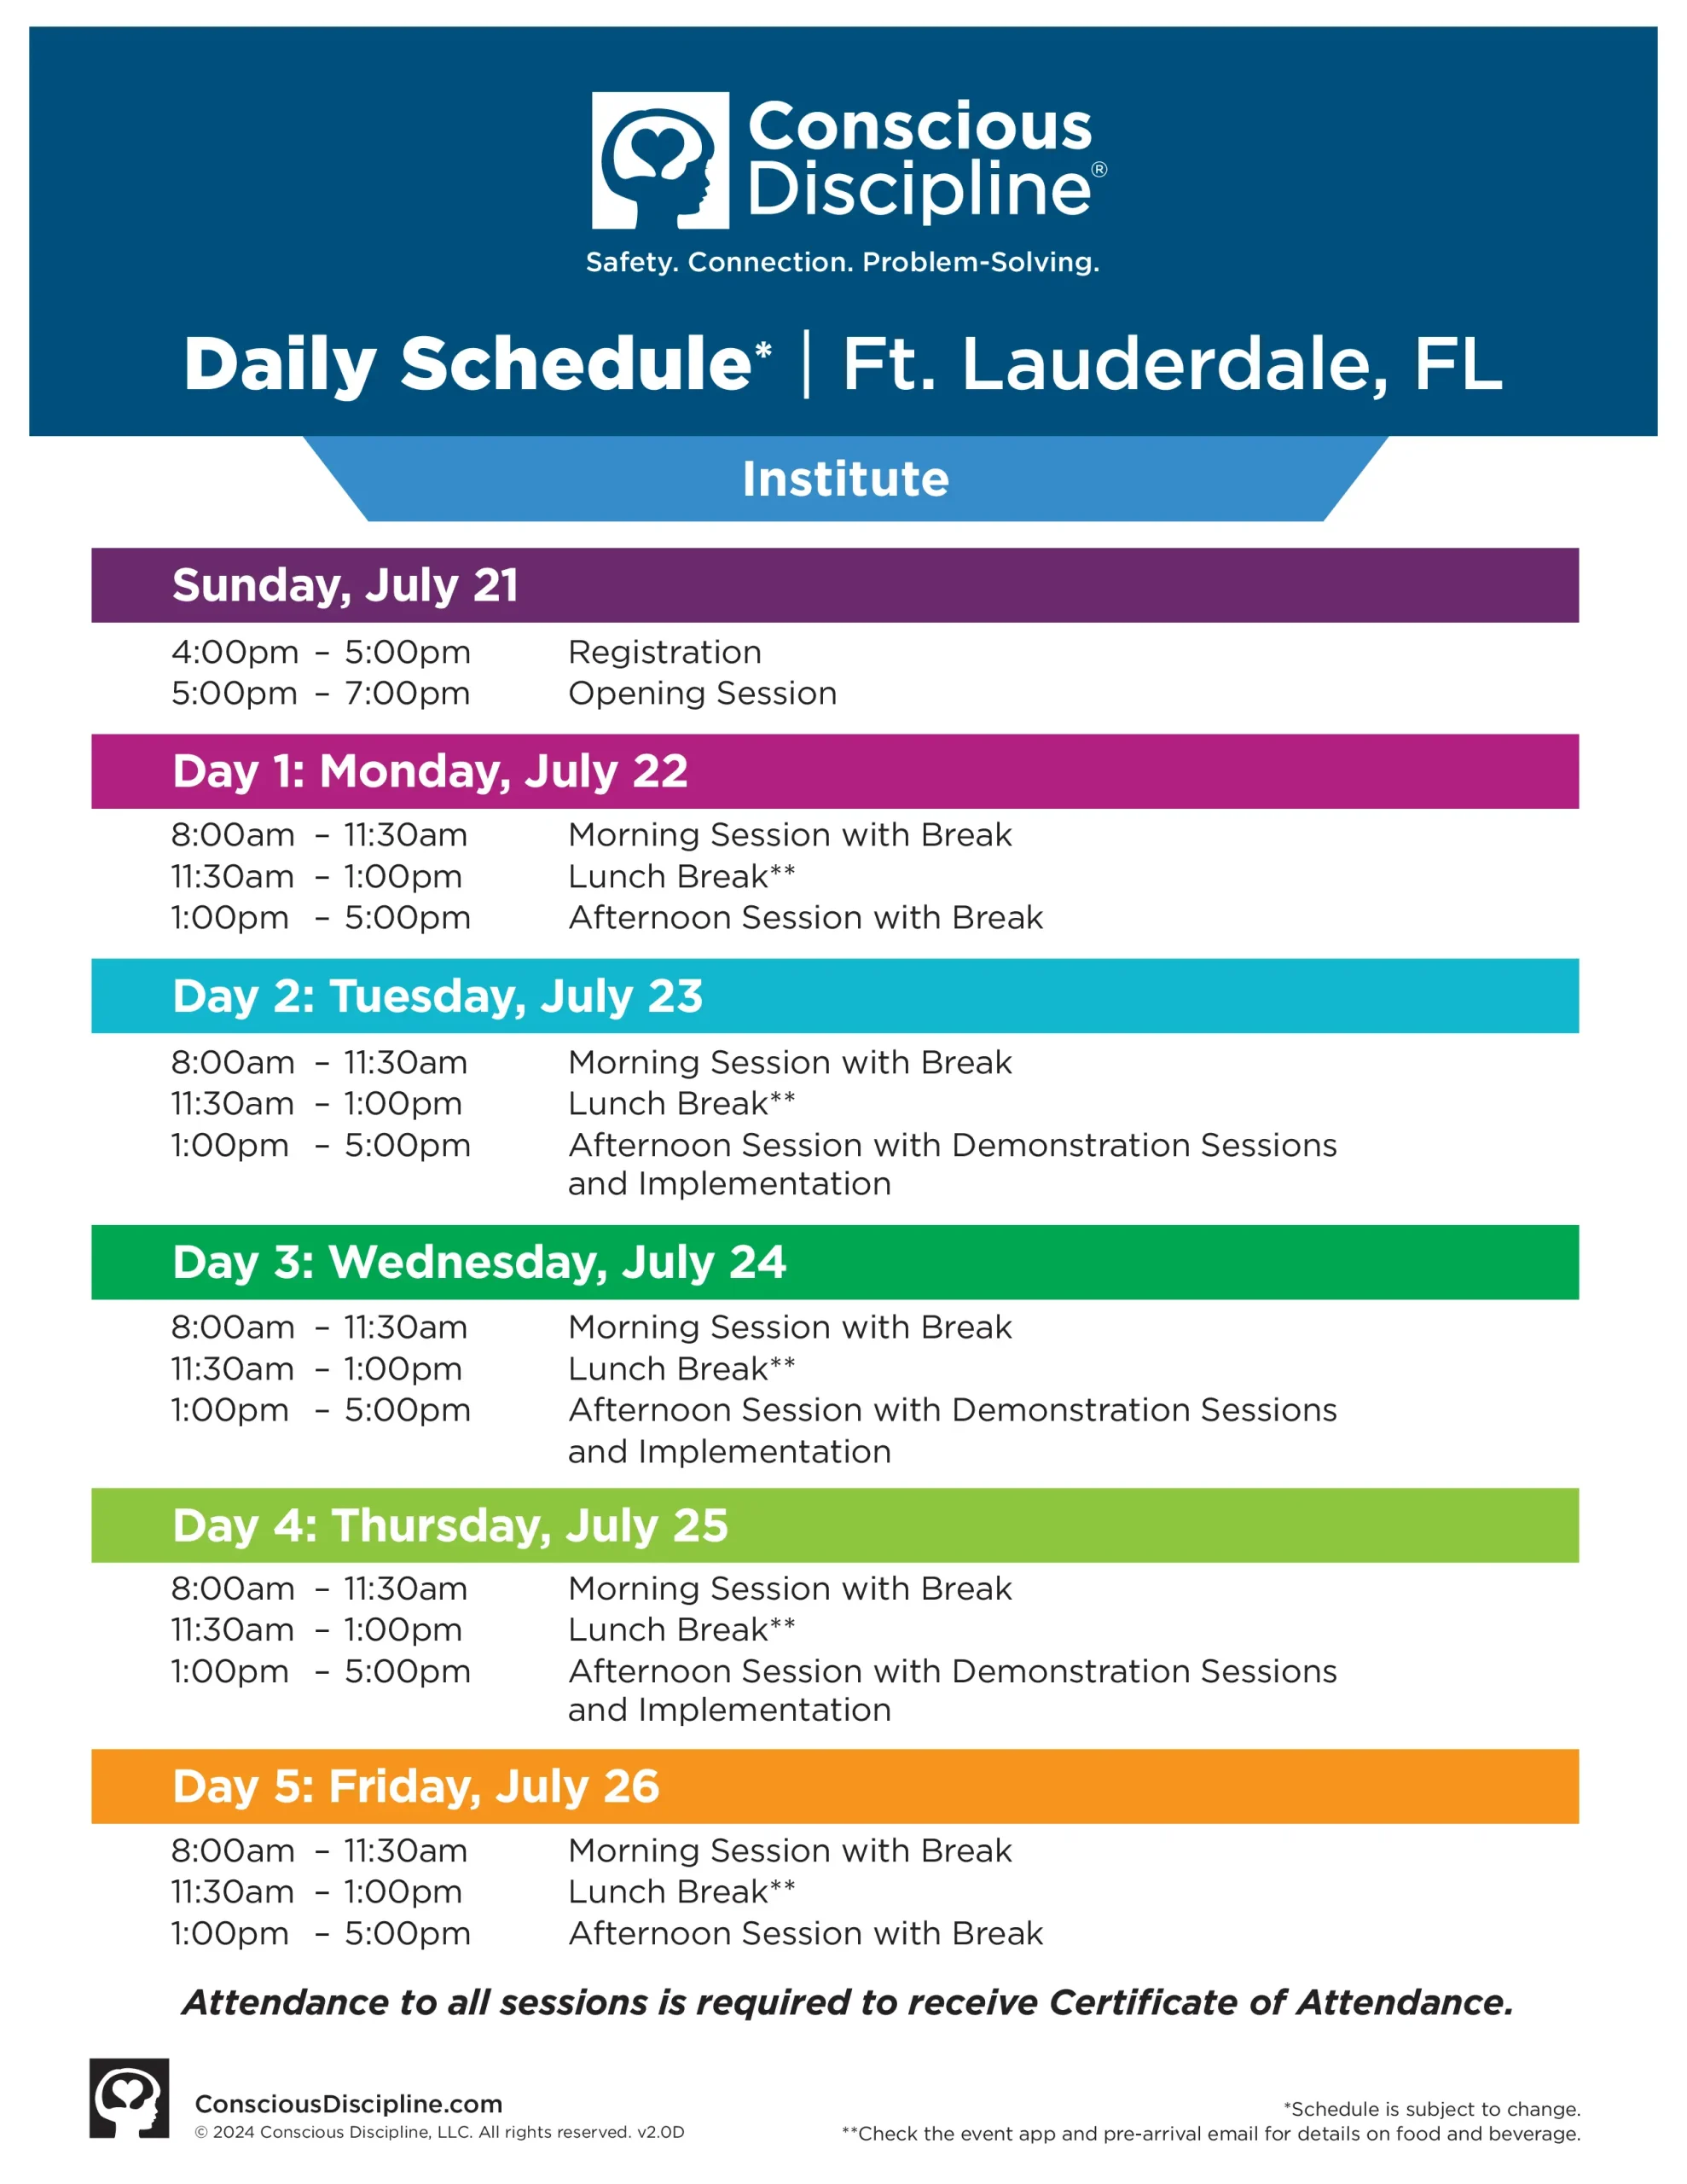 Ft. Lauderdale event schedule